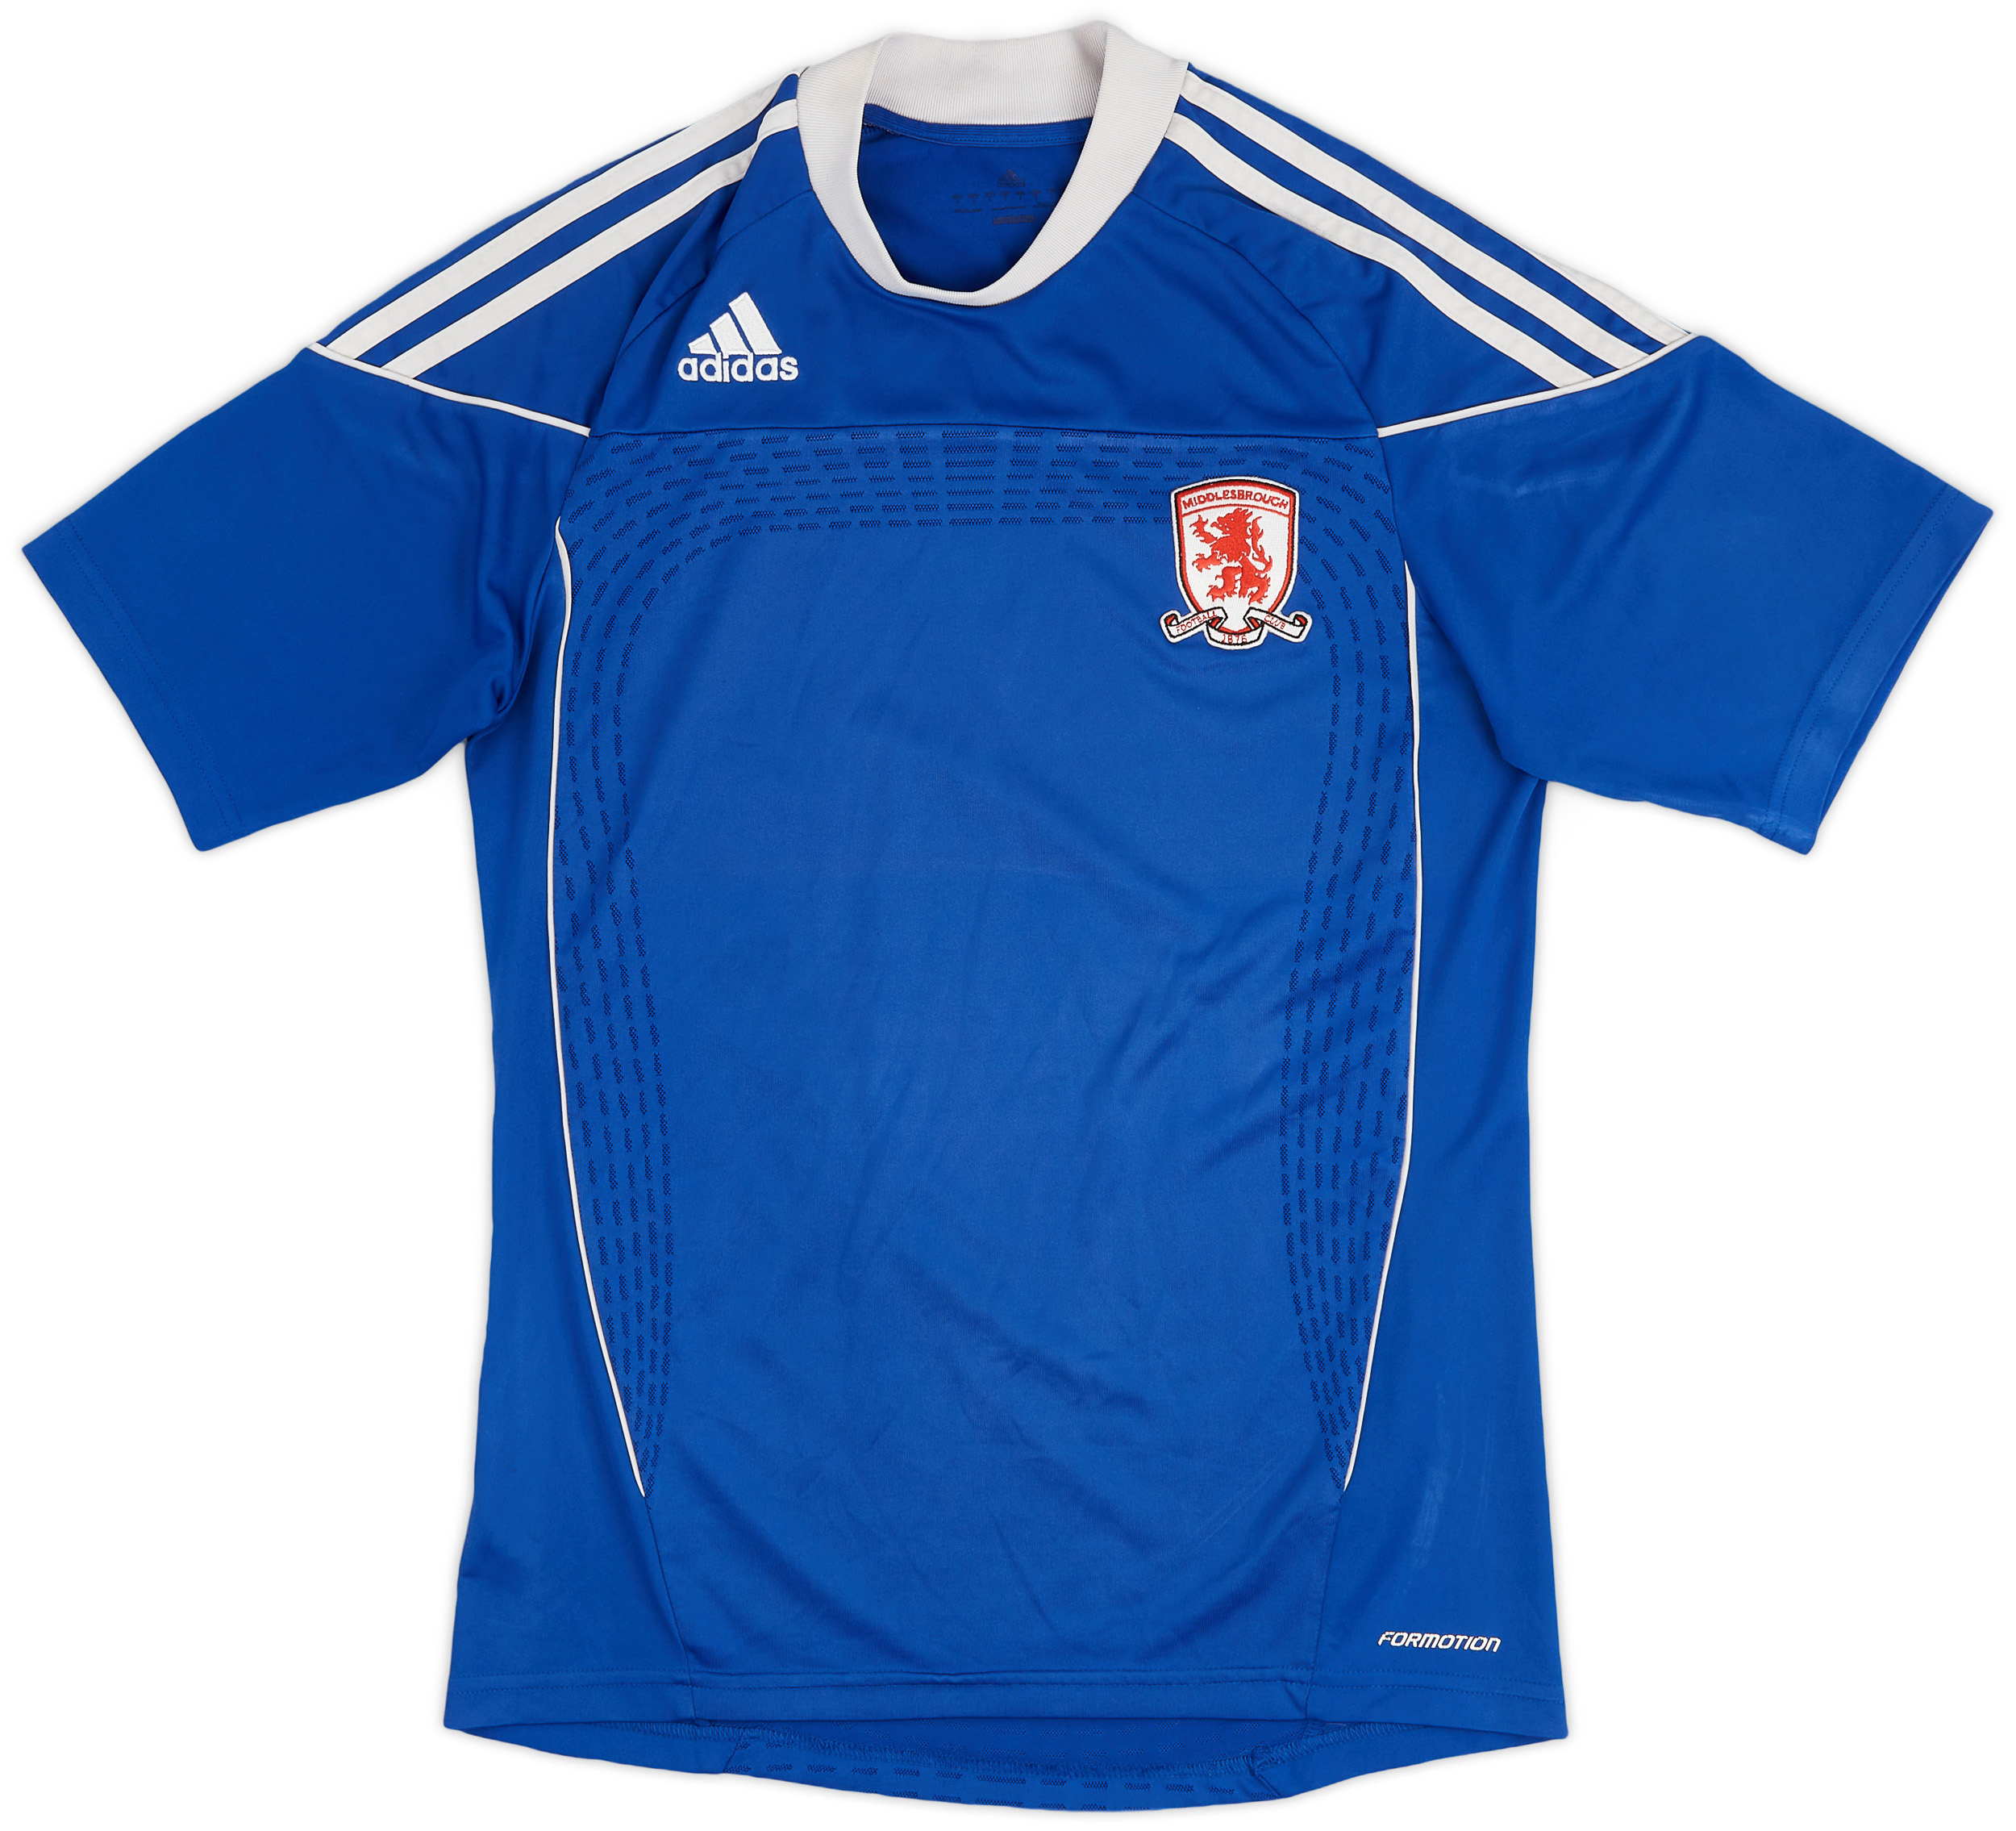 2010-11 Middlesbrough Away Shirt - 5/10 - ()